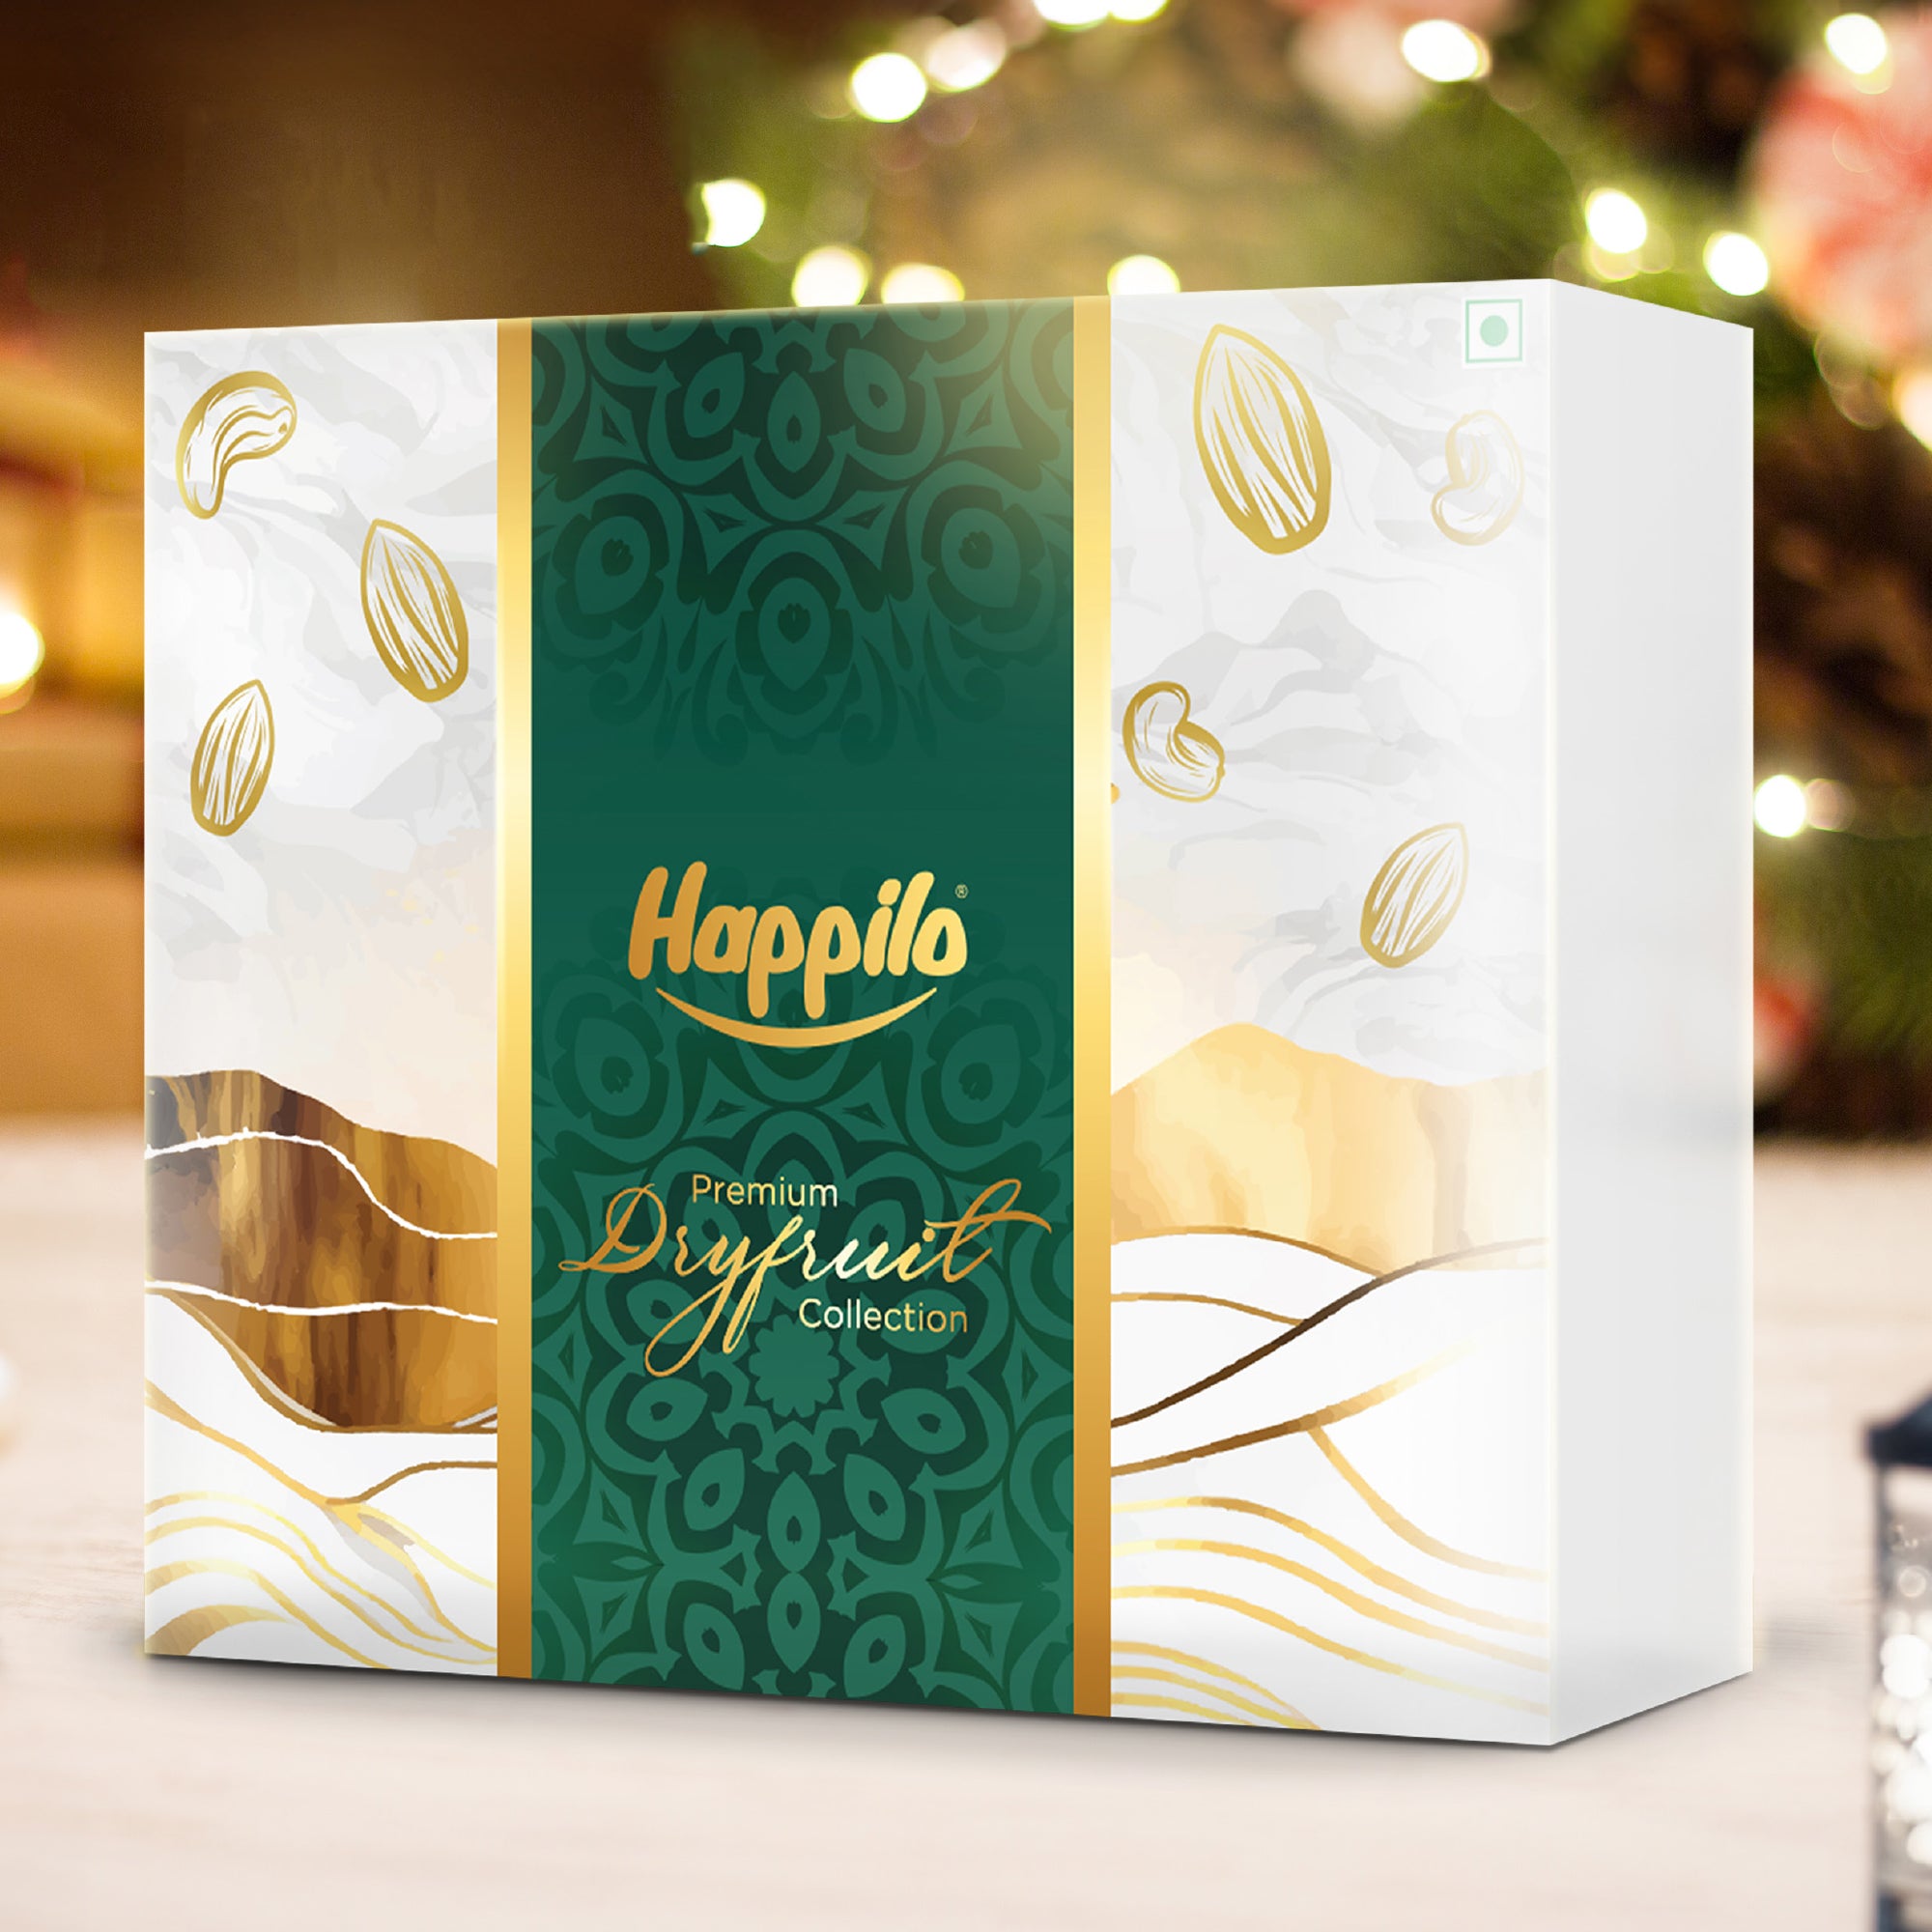 Happilo Dry Fruit Celebration Gift Box Gold Finch